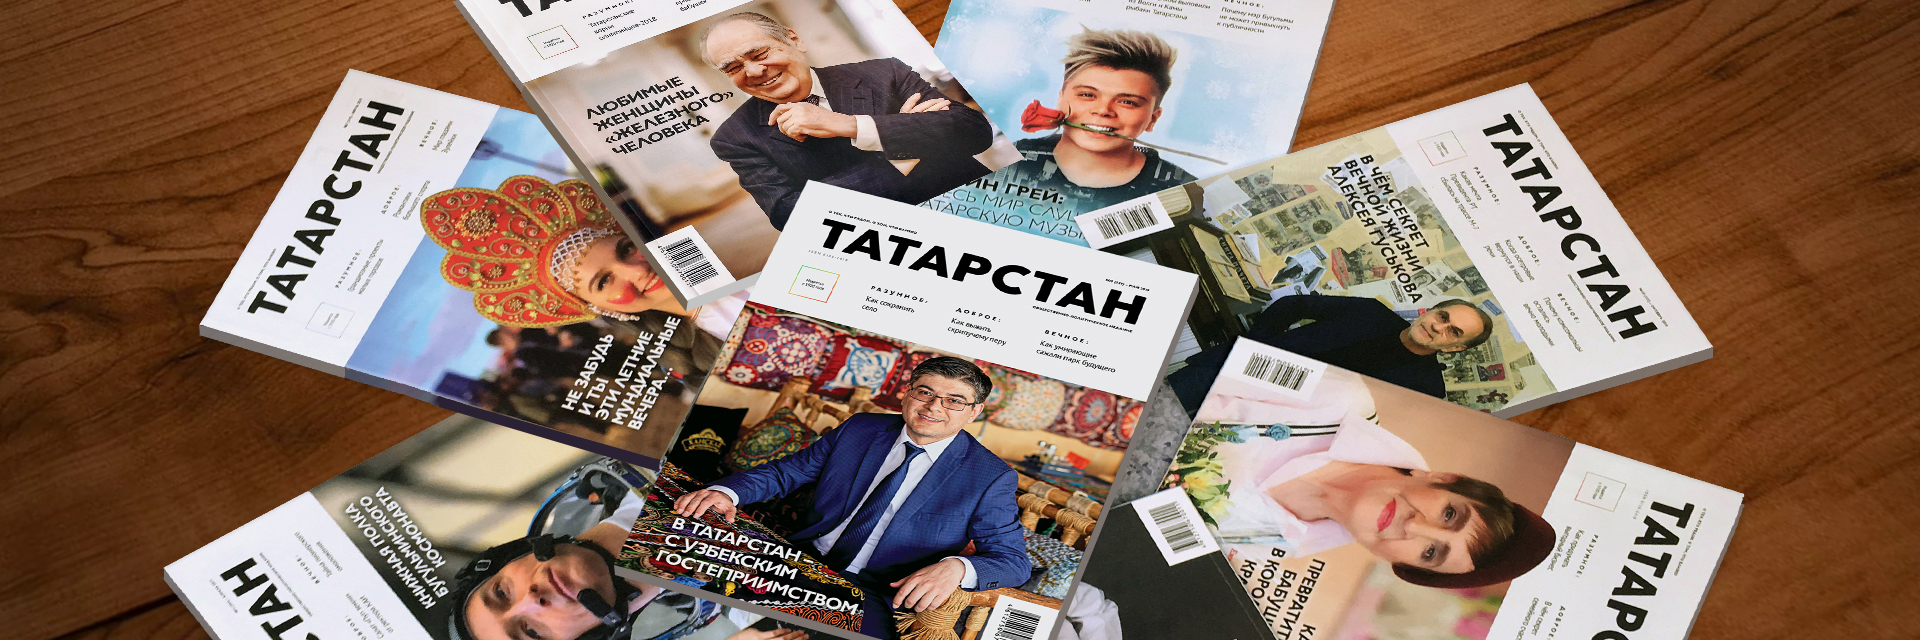 Сделайте карьеру с журналом "Татарстан"